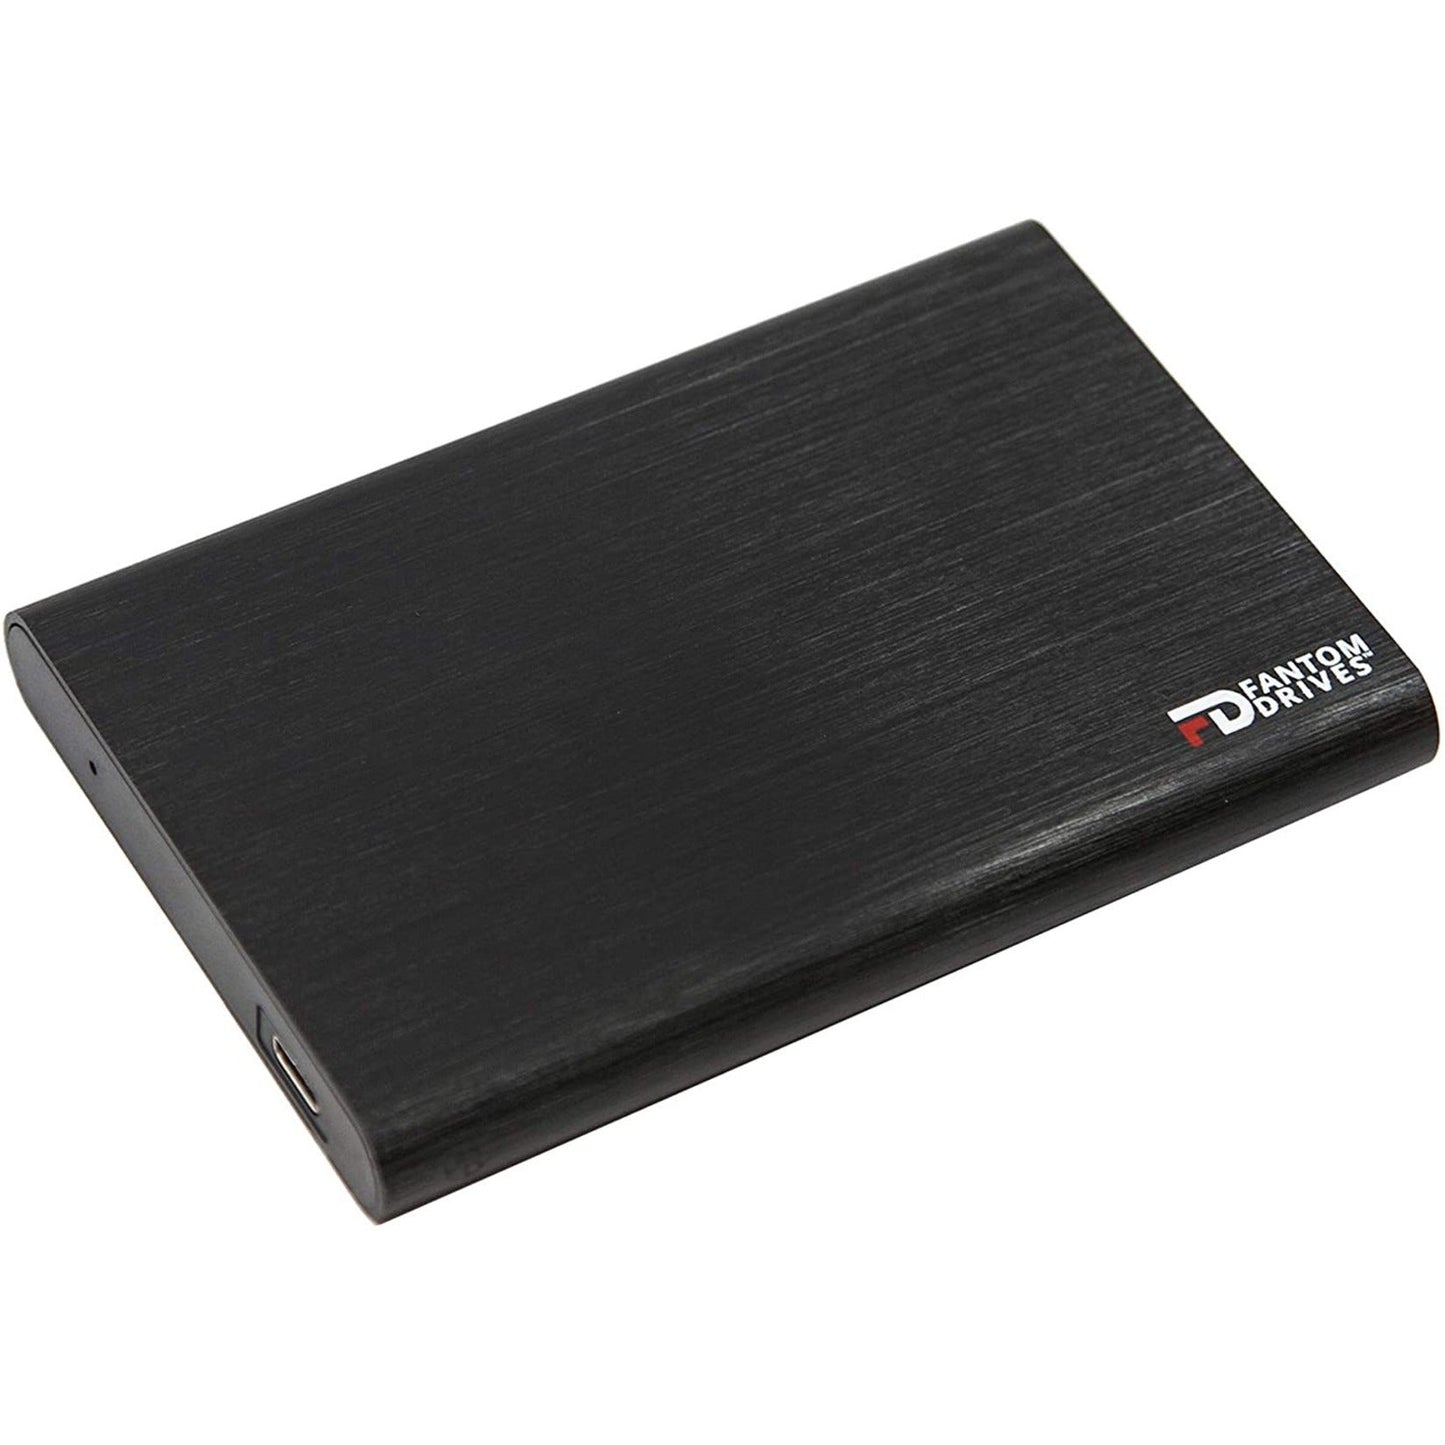 MicroNet GF3BMC2000SSHD 2 TB Portable Hybrid Hard Drive - External - Black